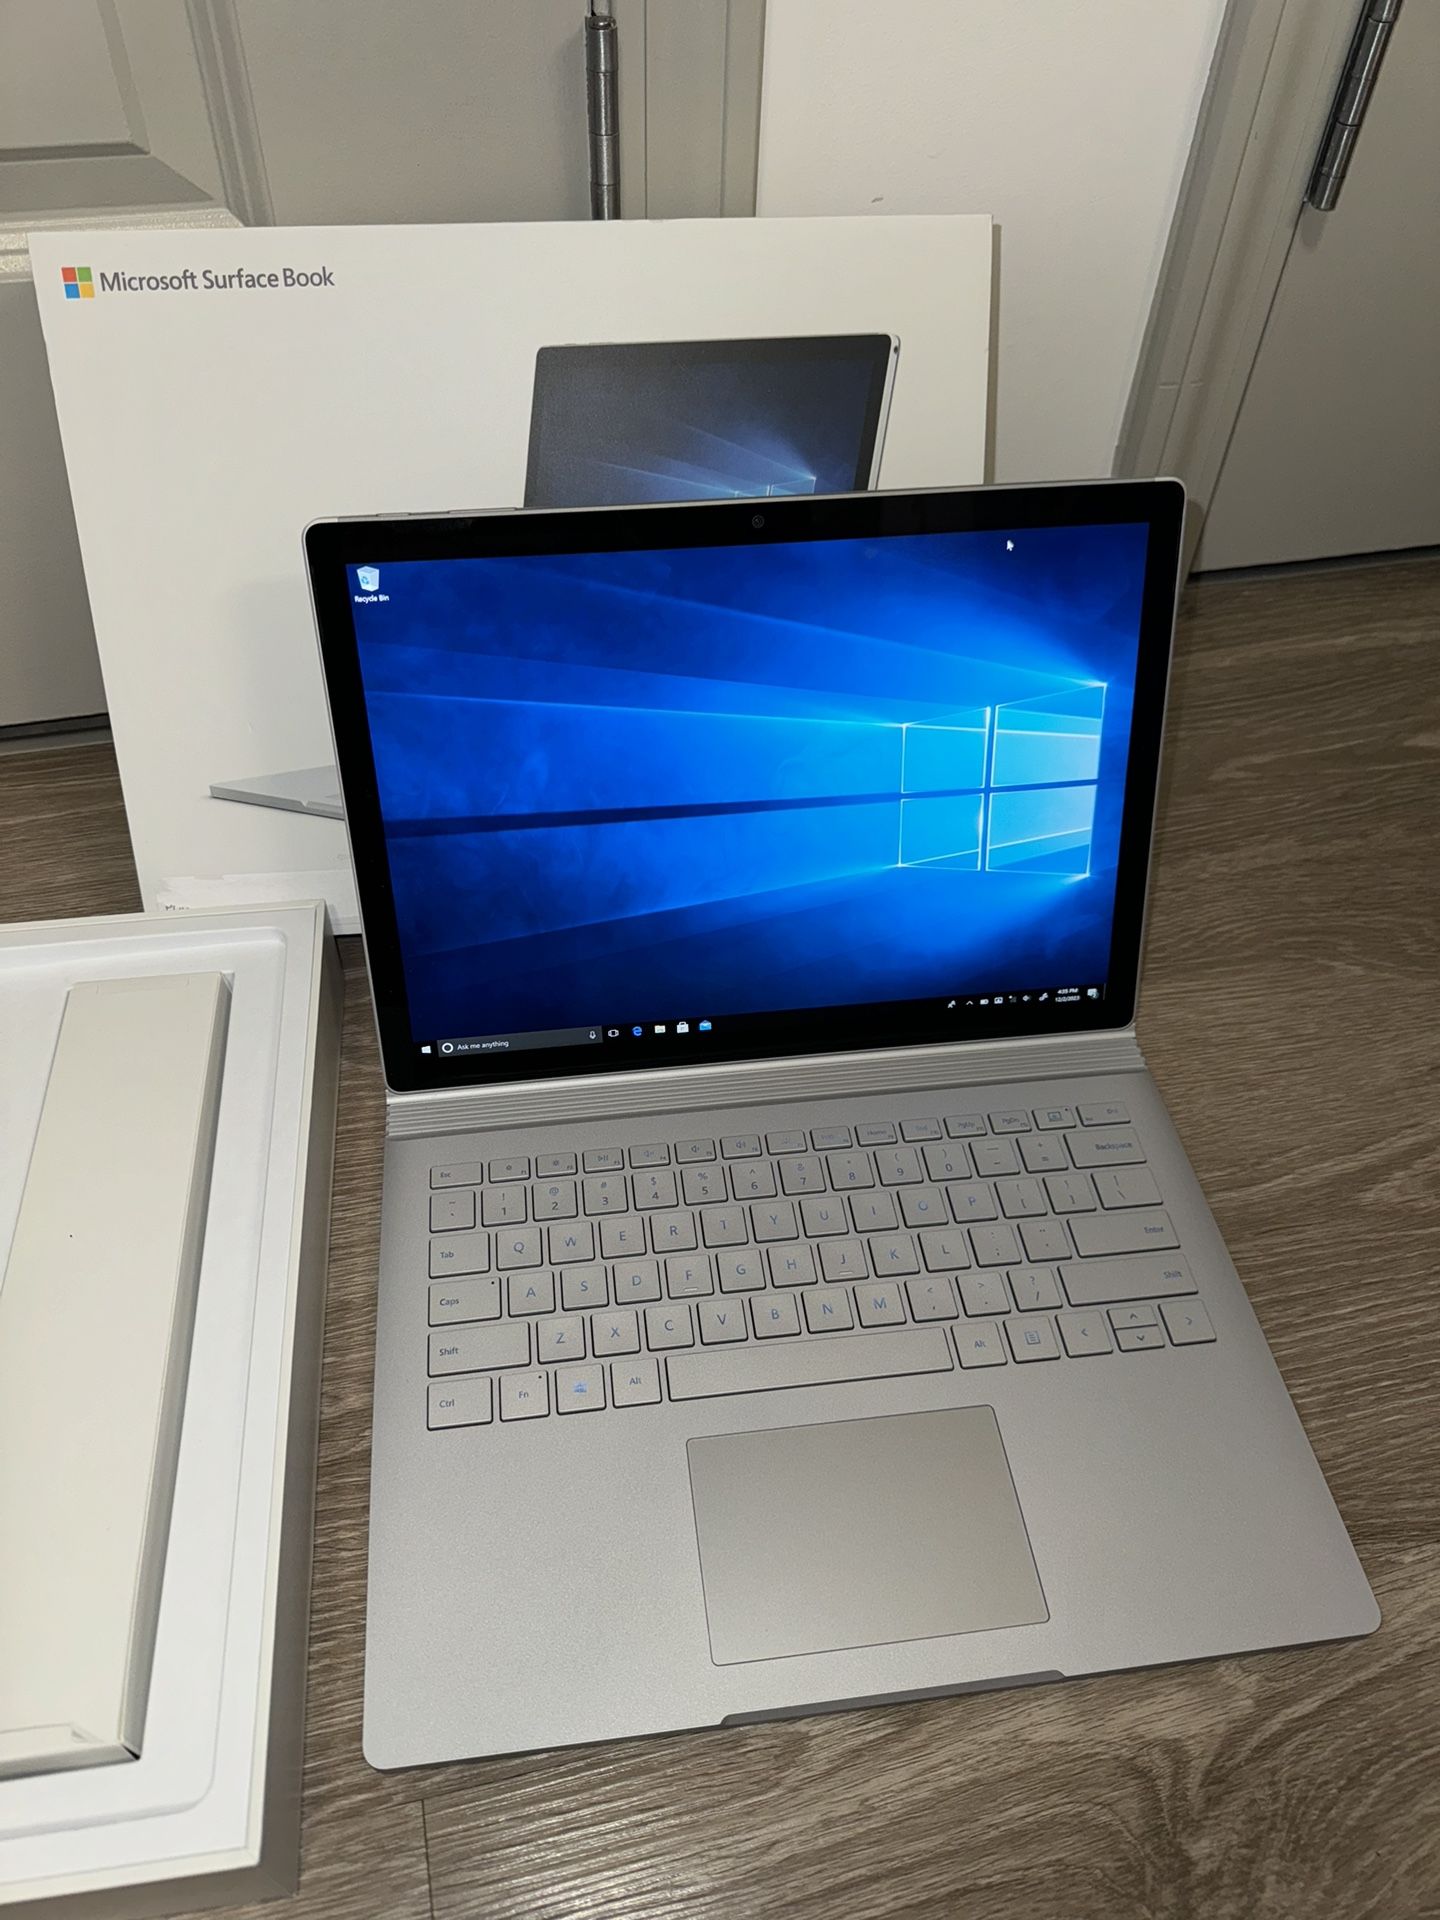 Microsoft Surface Book 2 13” i7 16GB 512GB NVIDIA GTX 1050 New Open